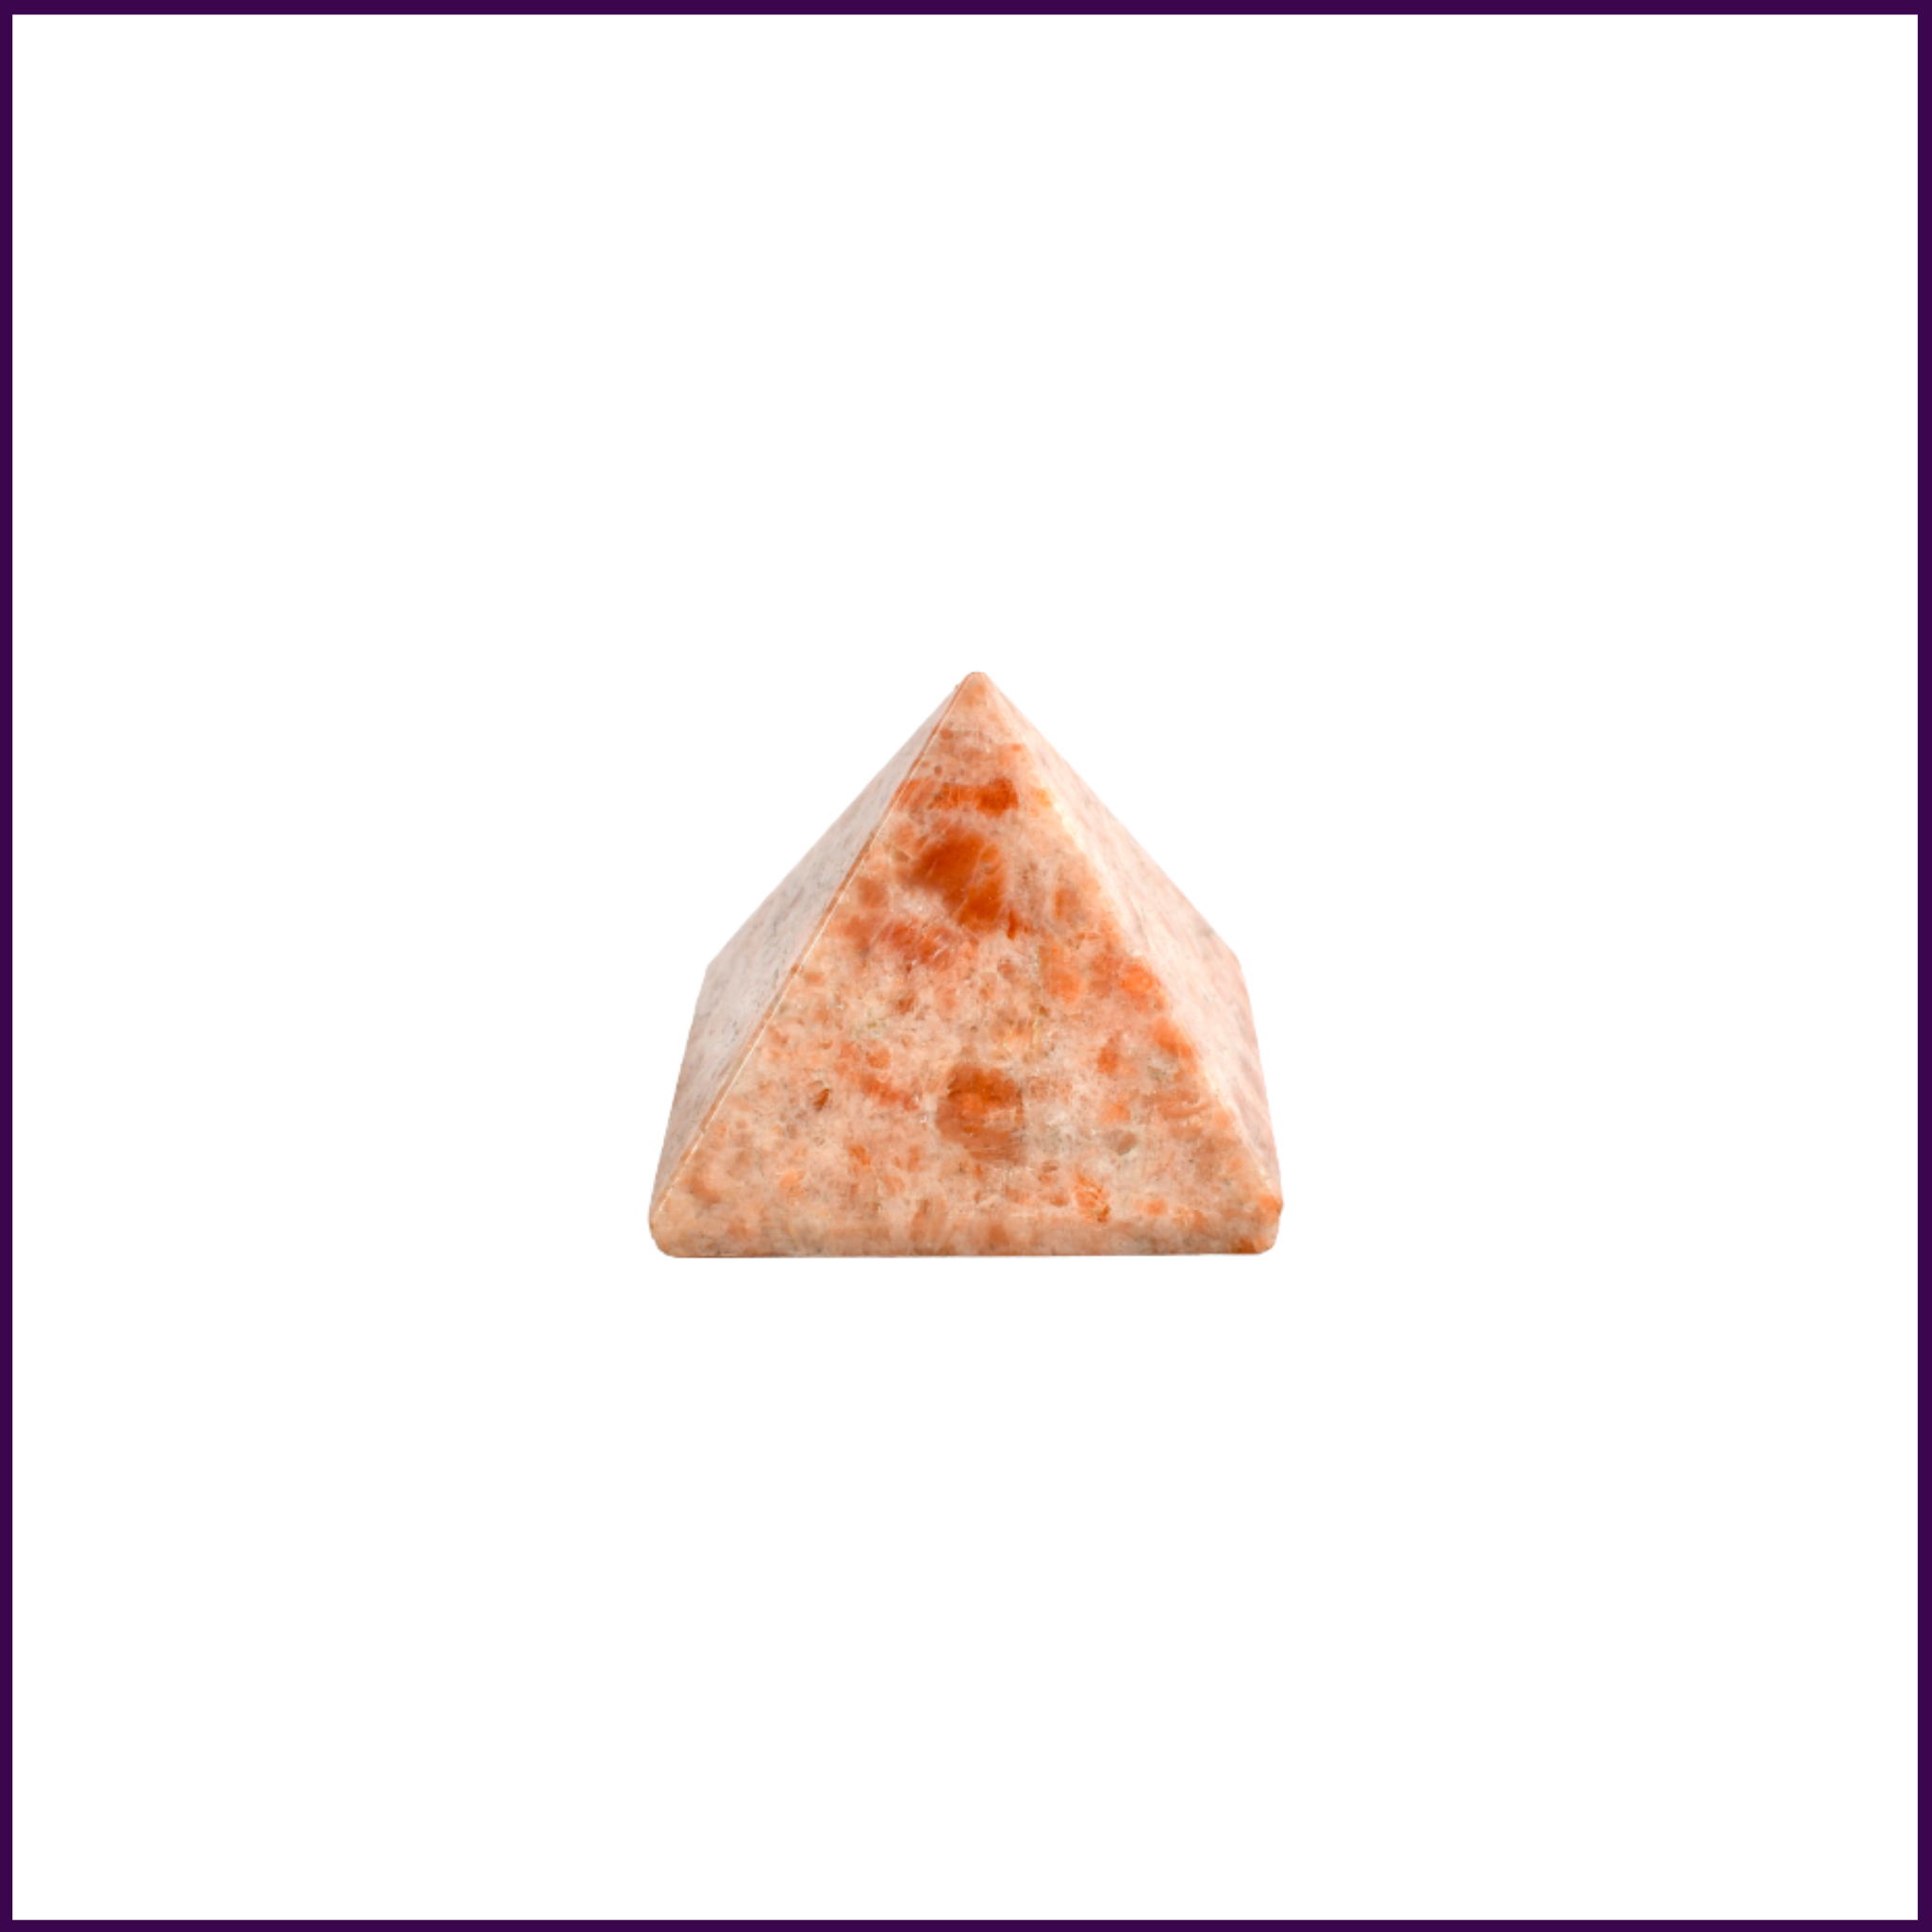 Career Development Kit - 2 Pyramid Meditation Head Caps + 1 Sunstone Crystal Pyramid (2inch) For Career Development - 0